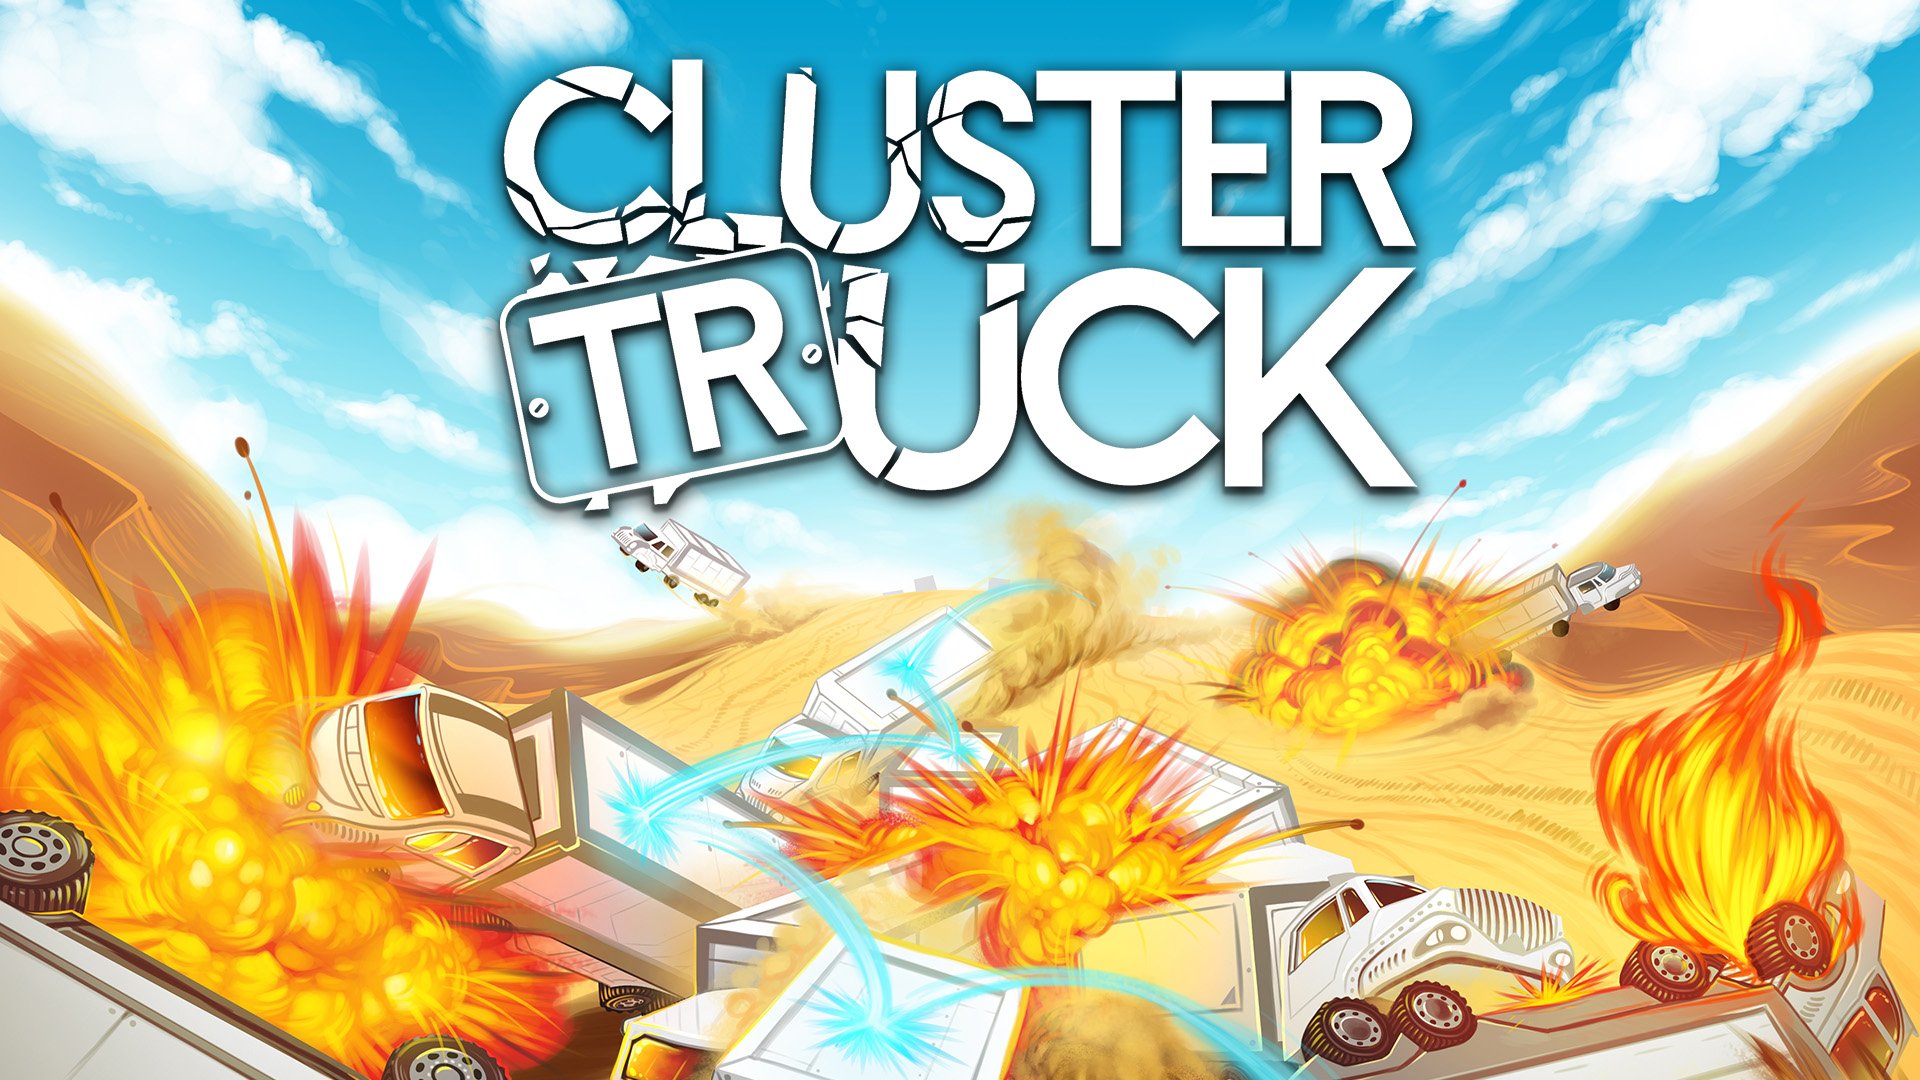 clustertruck game wiki